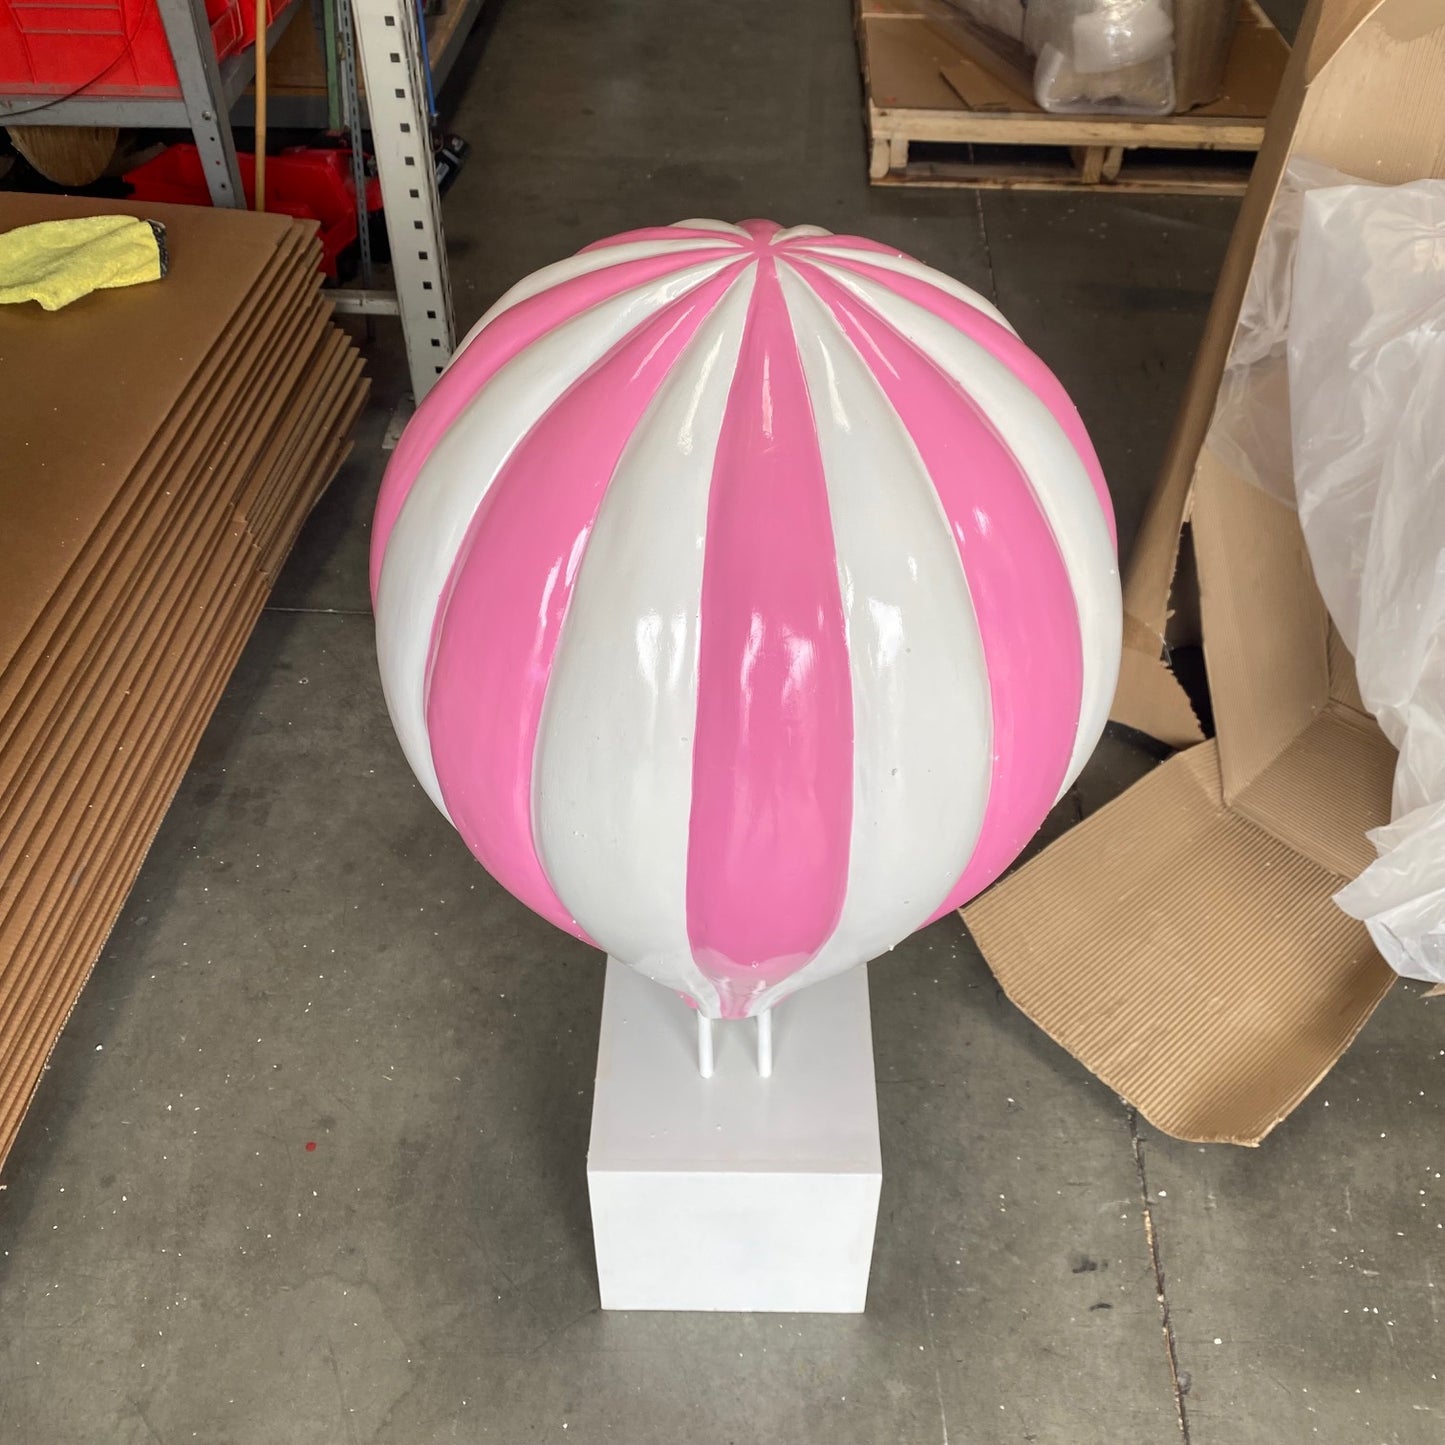 Small Pink Hot Air Balloon Statue